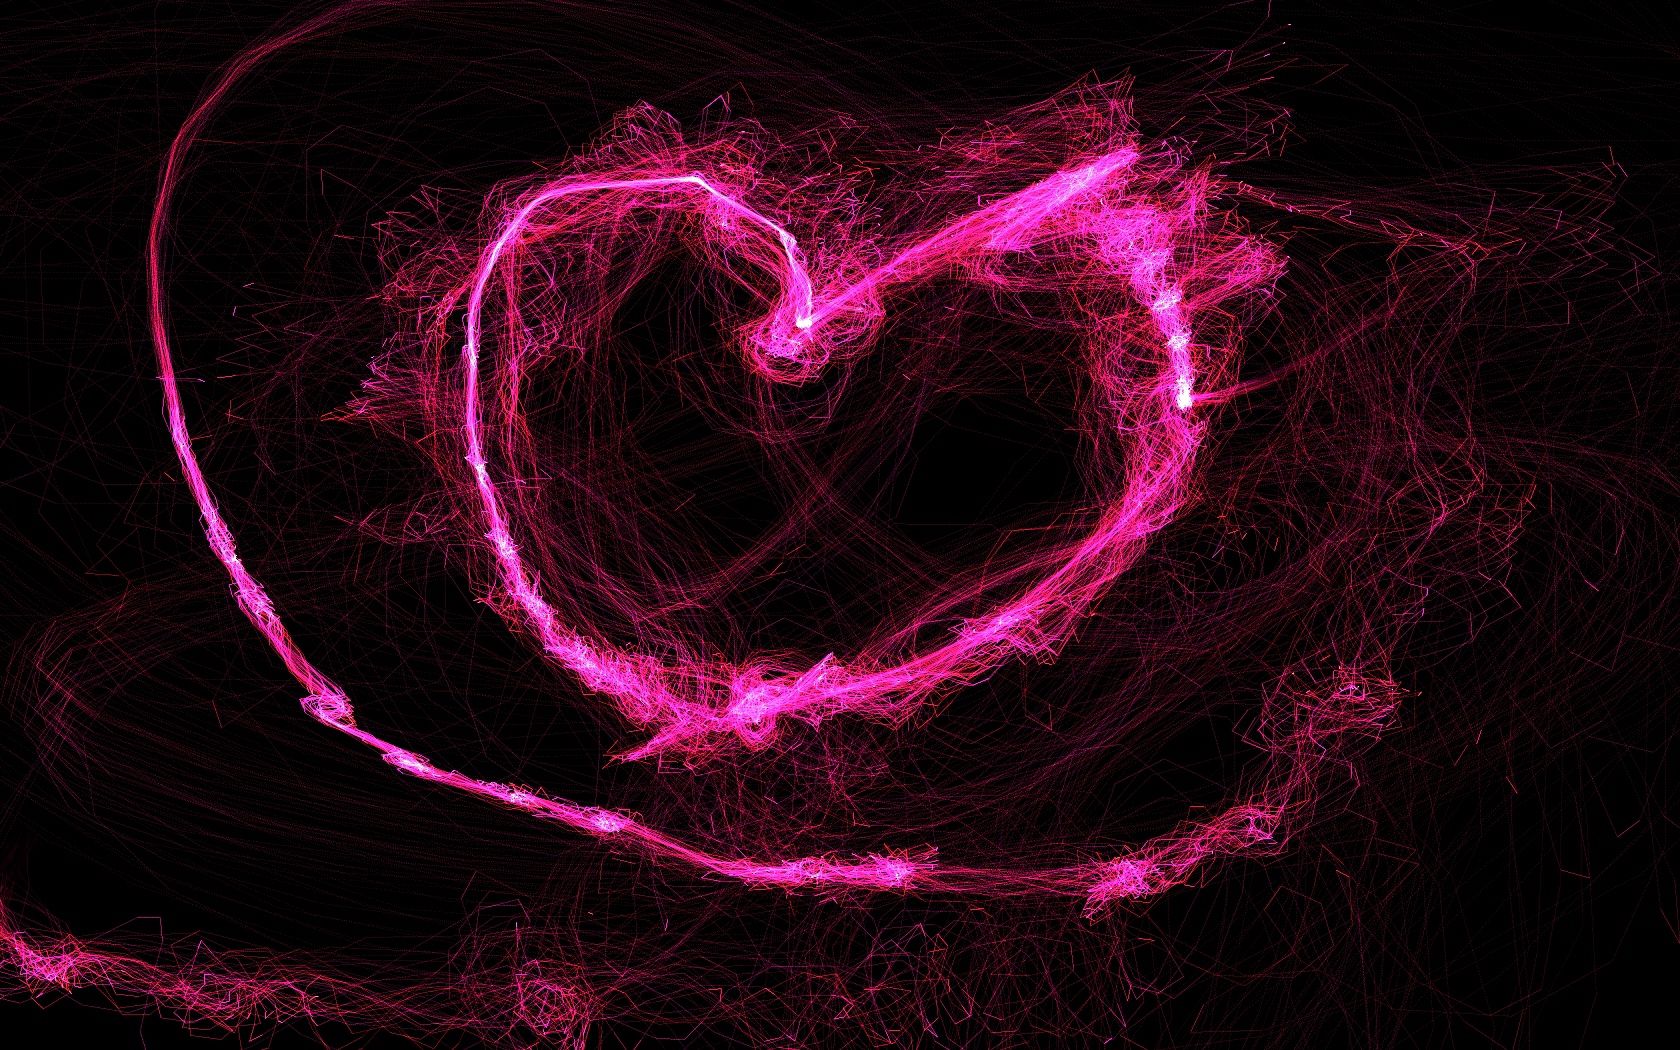 Descarga gratuita de fondo de pantalla para móvil de Rosa, Imagen, Rosado, Corazón, Púrpura, Dibujo, Un Corazón, Amor, Violeta.